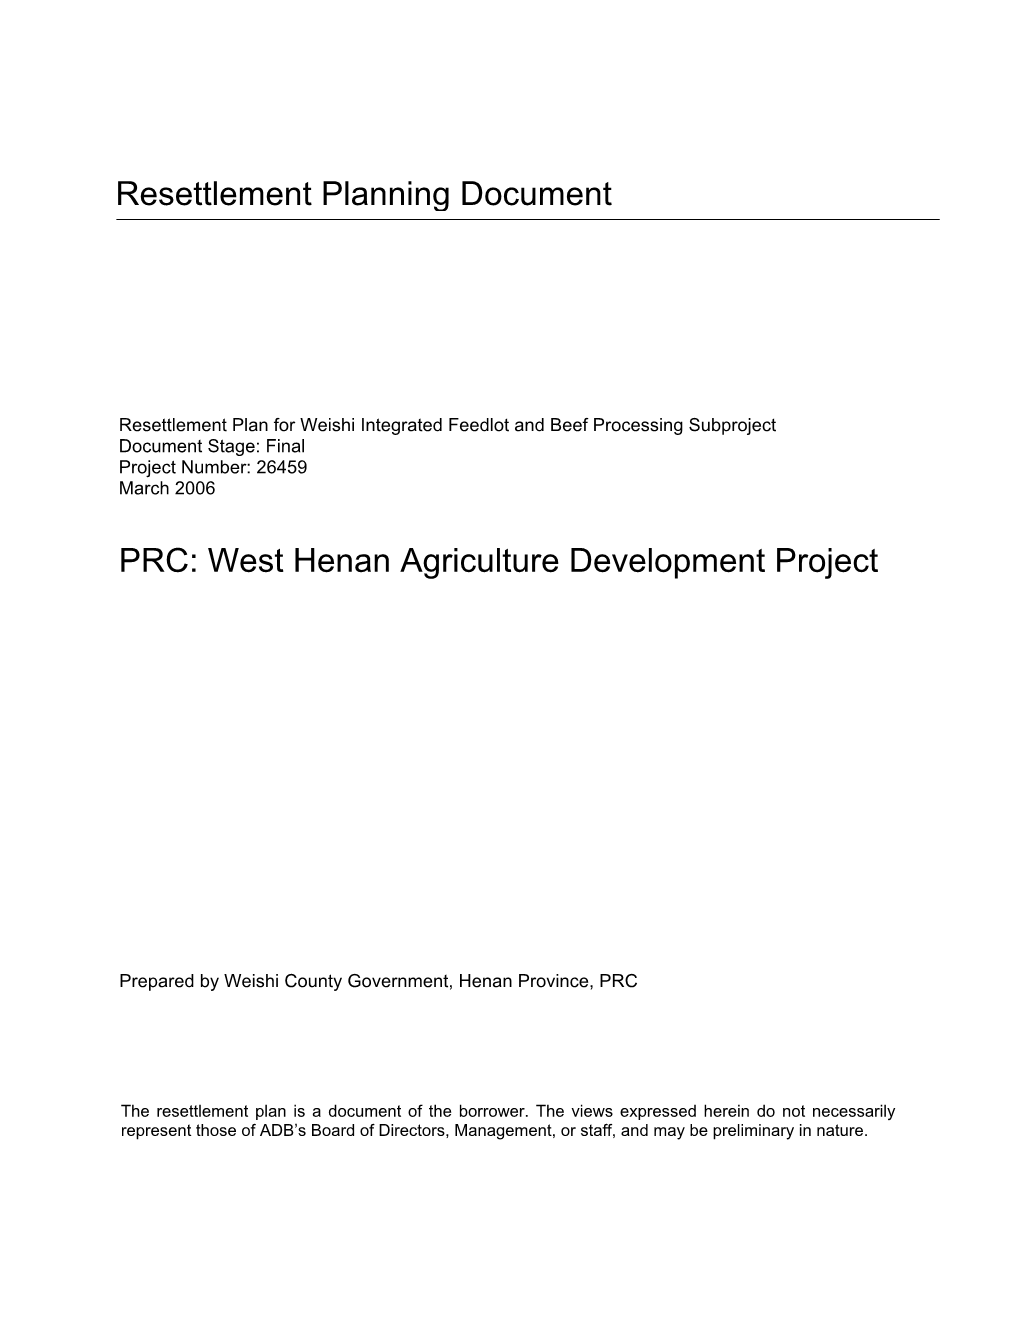 West Henan Agriculture Development Project